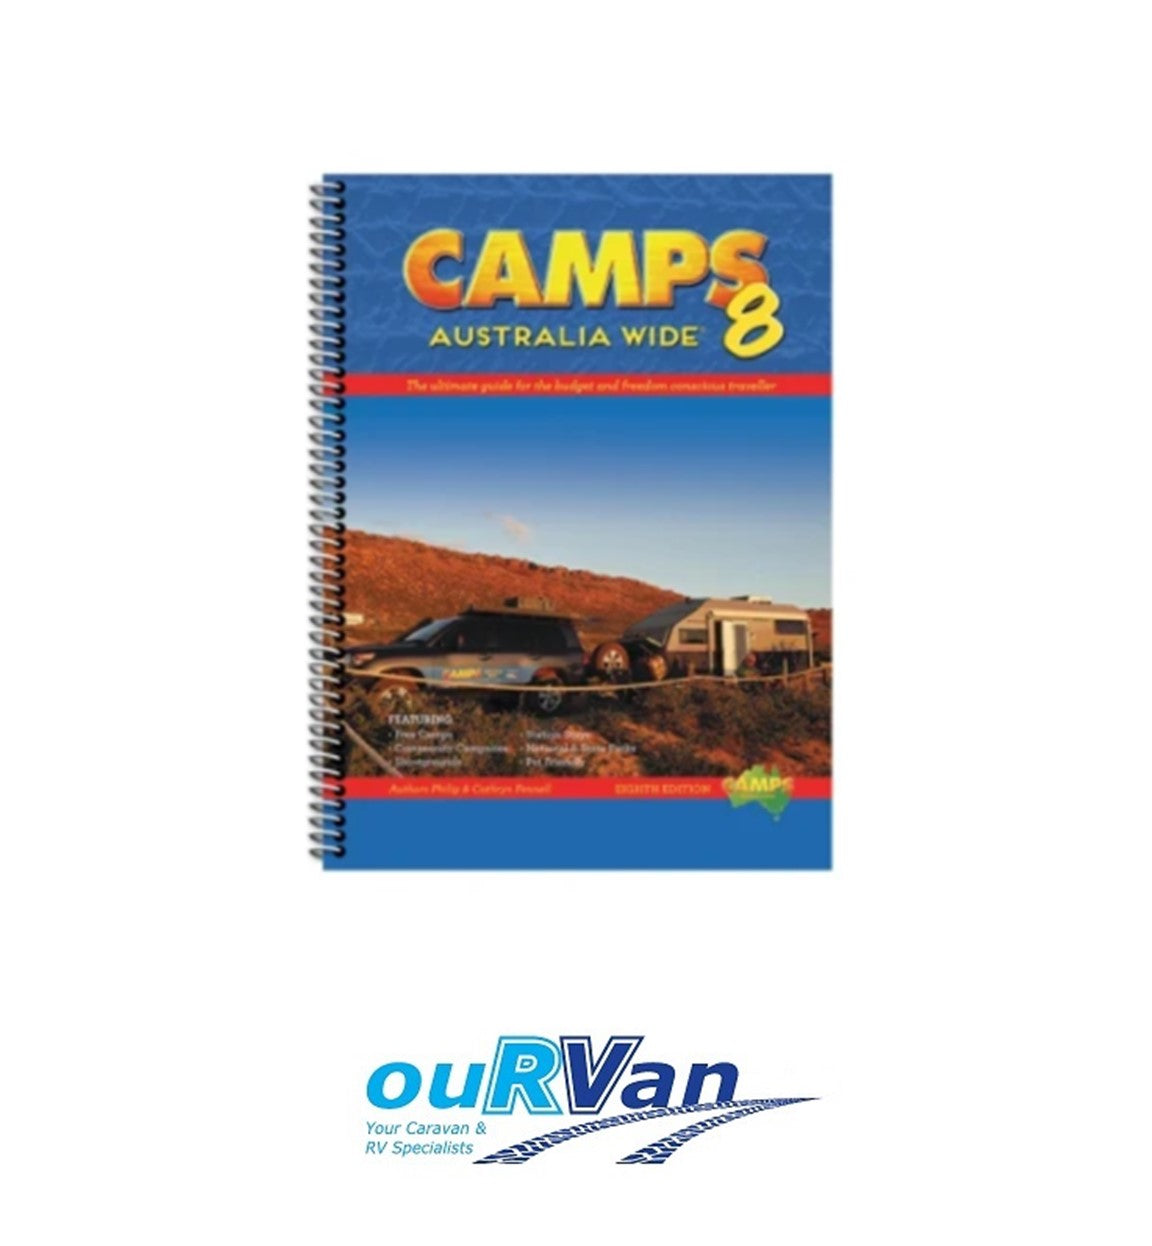 Camps Edition 8 Australia Wide Book 043068 Caravan Camping Motorhome Rv